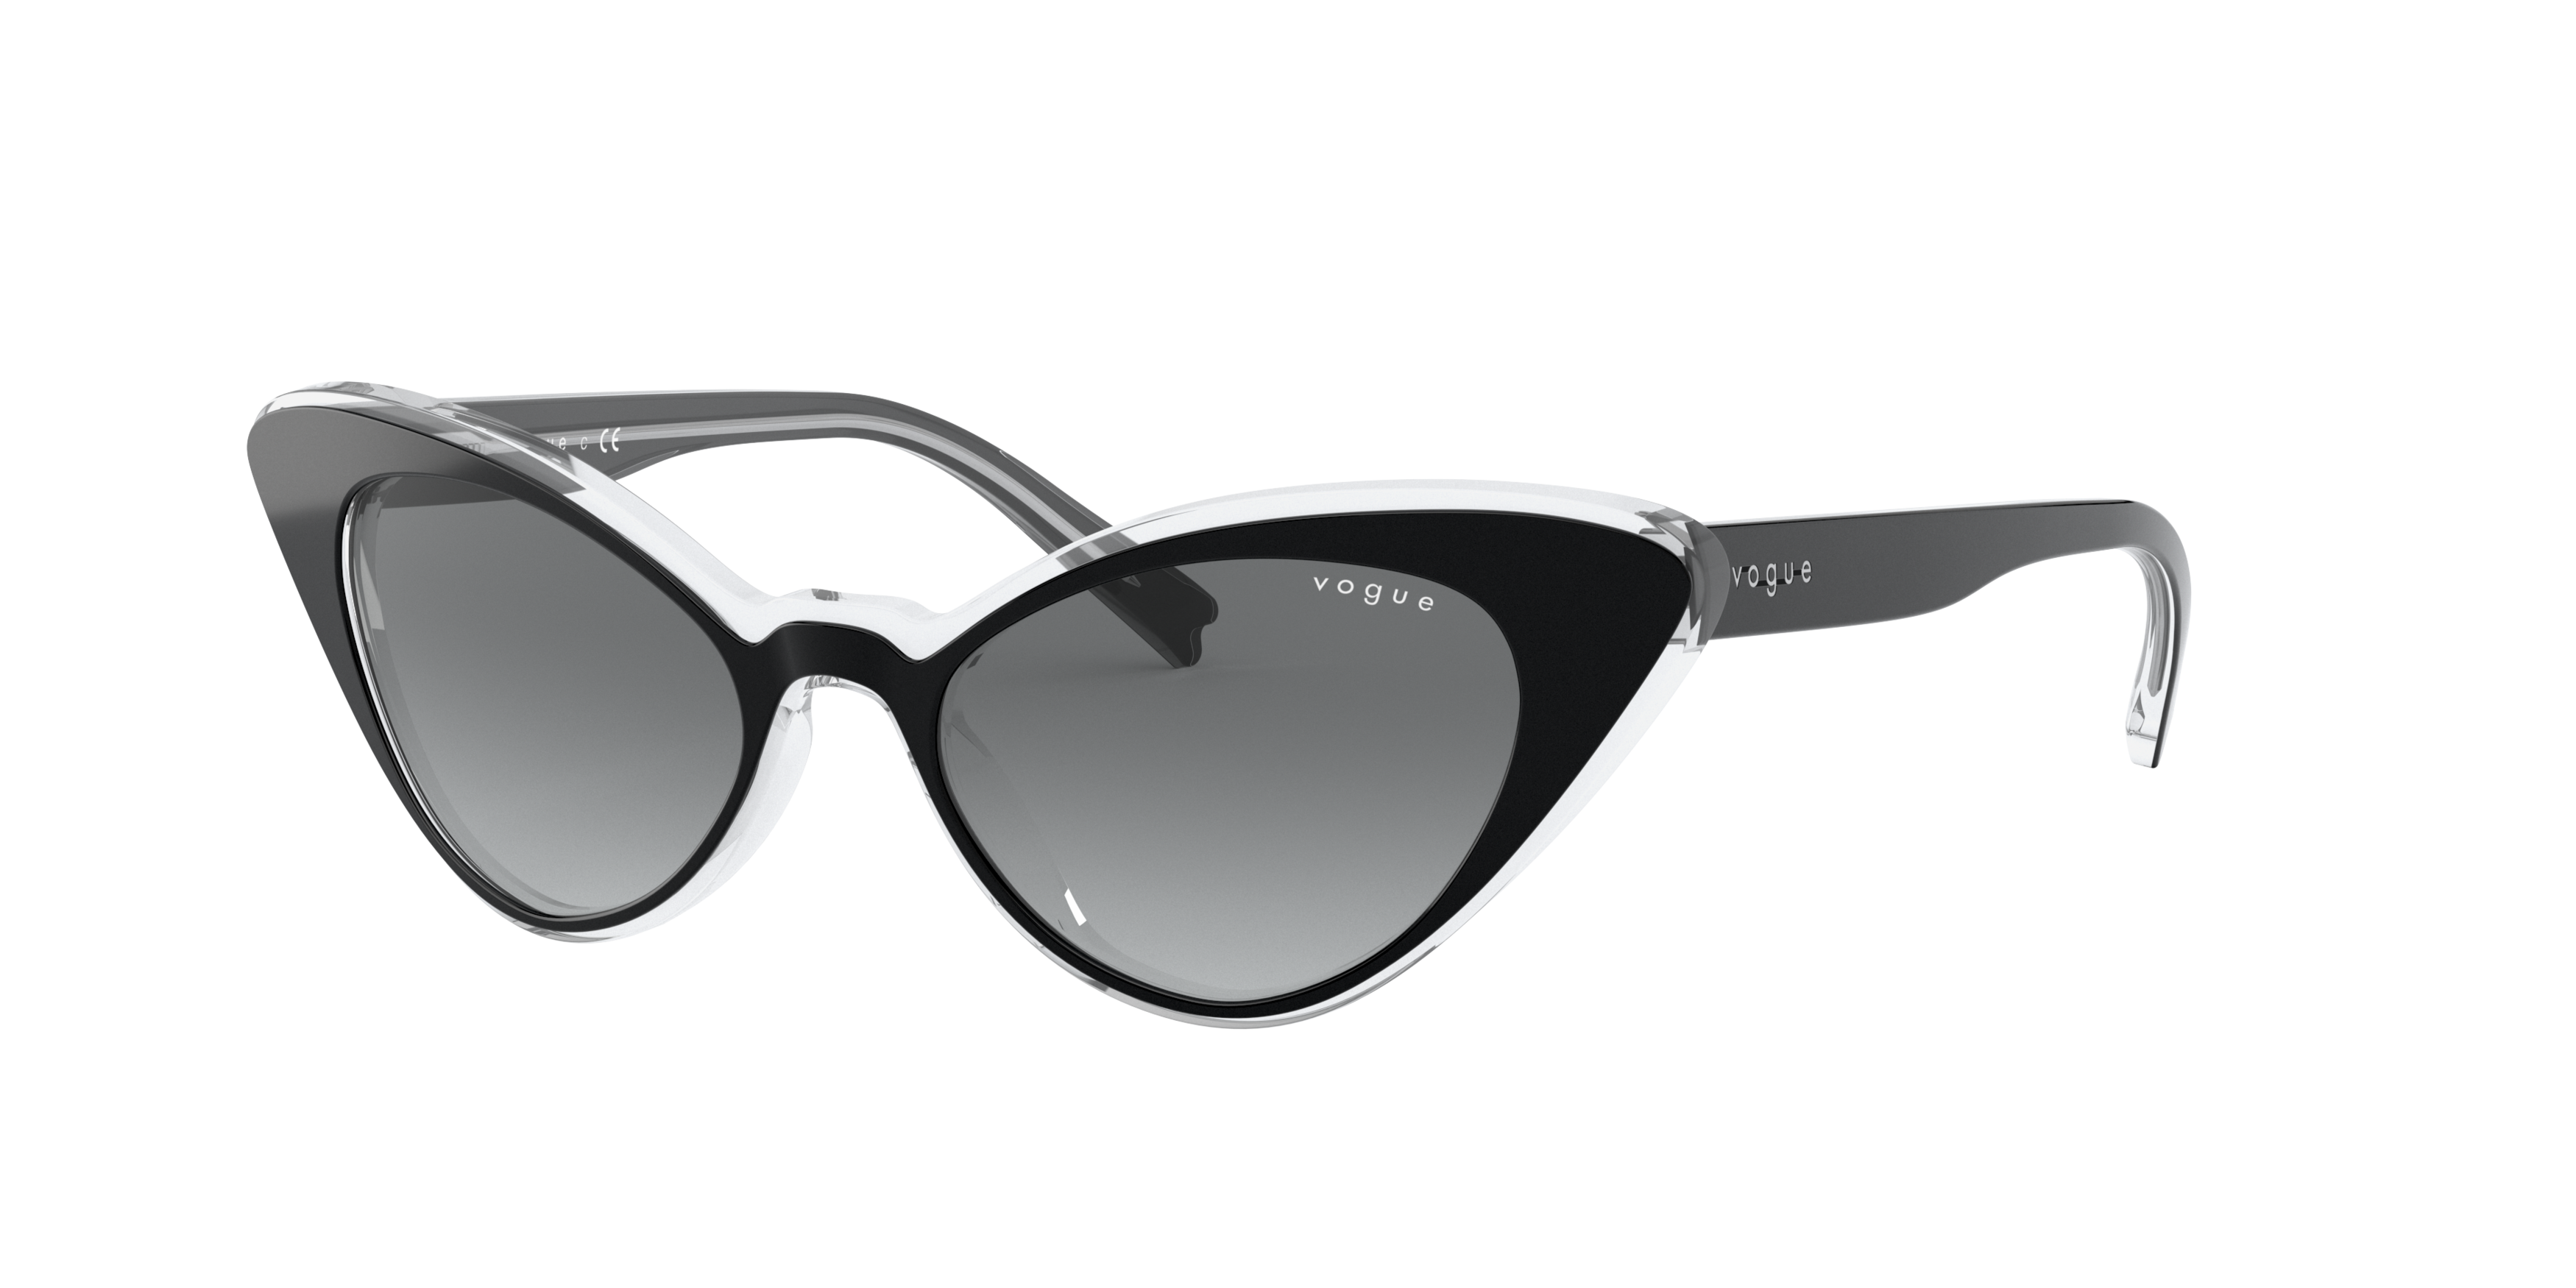 Angle_Left01 Vogue MBB x VO 5317S Sunglasses Grey / Black